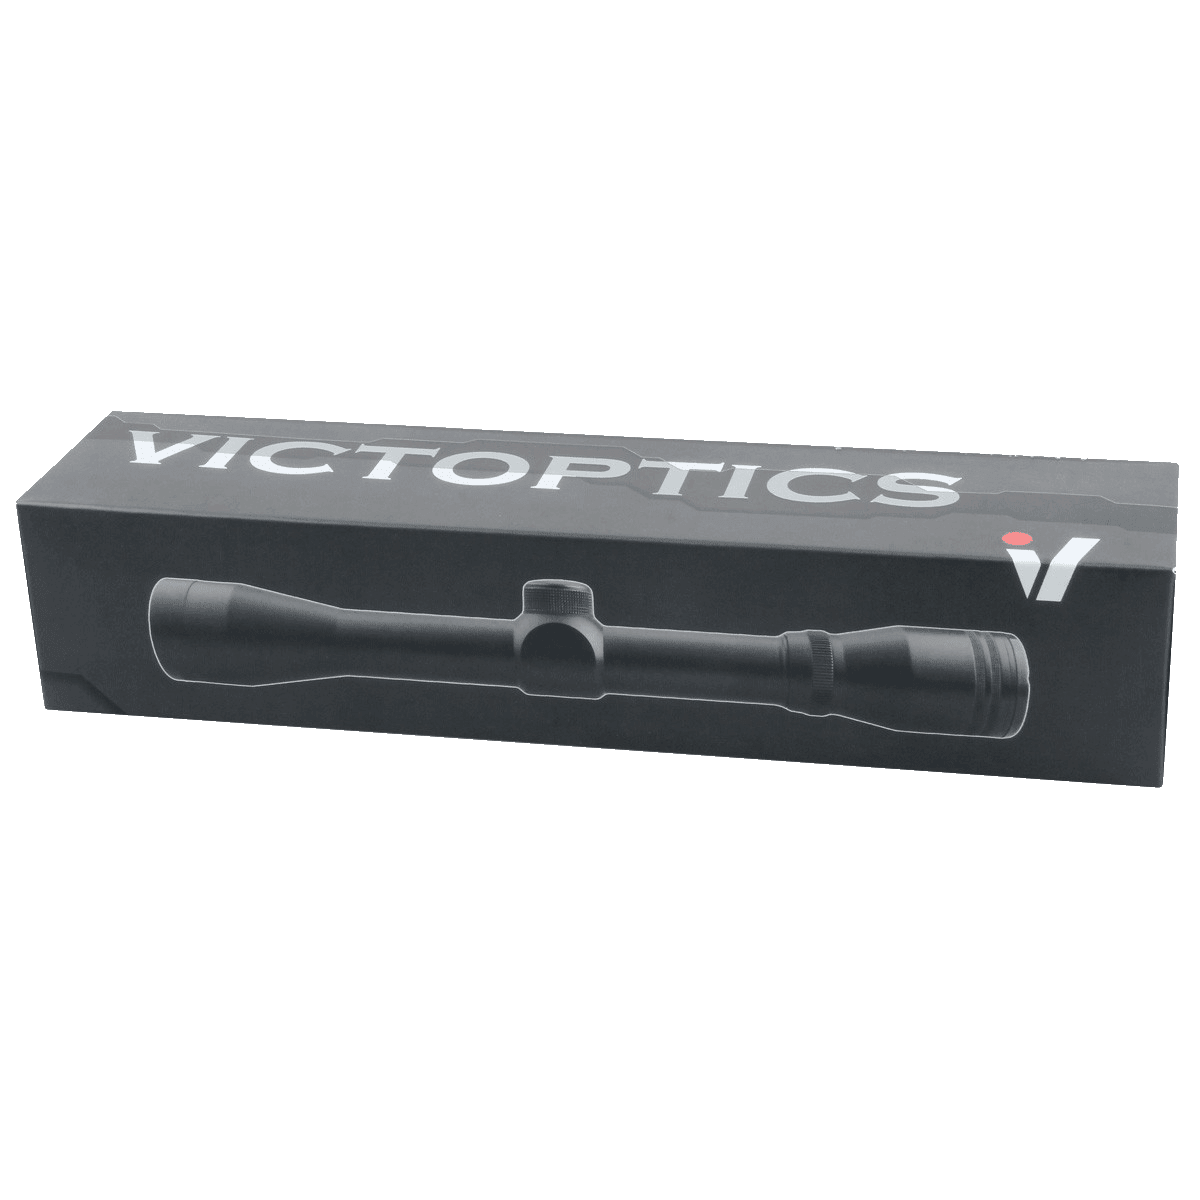 VECTOR OPTICS JAVELIN 4X32 SCOPE W/ MOUNT RINGS - NeonSales South Africa